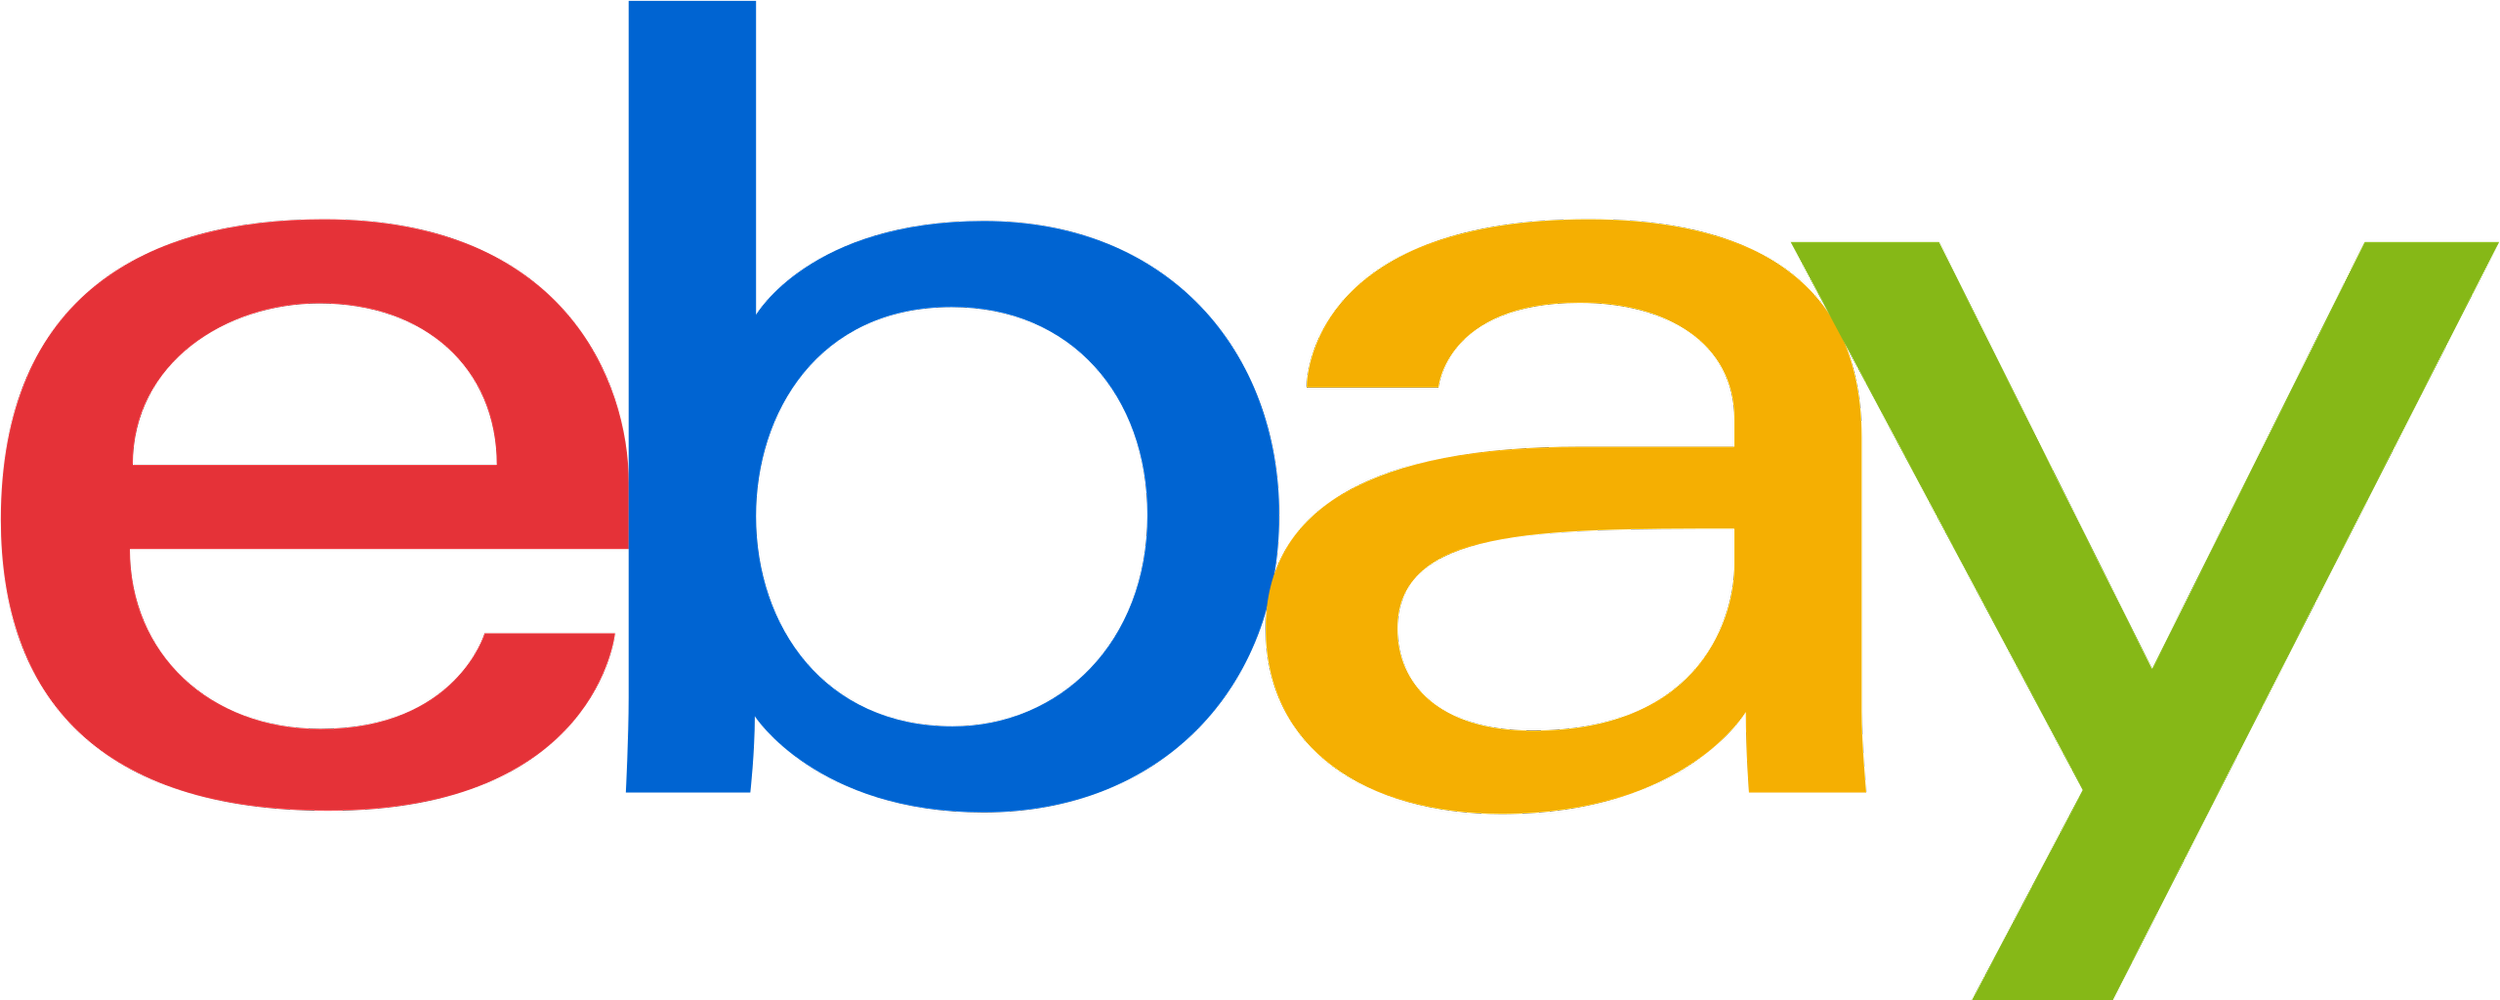 2560px-EBay_logo.svg.png